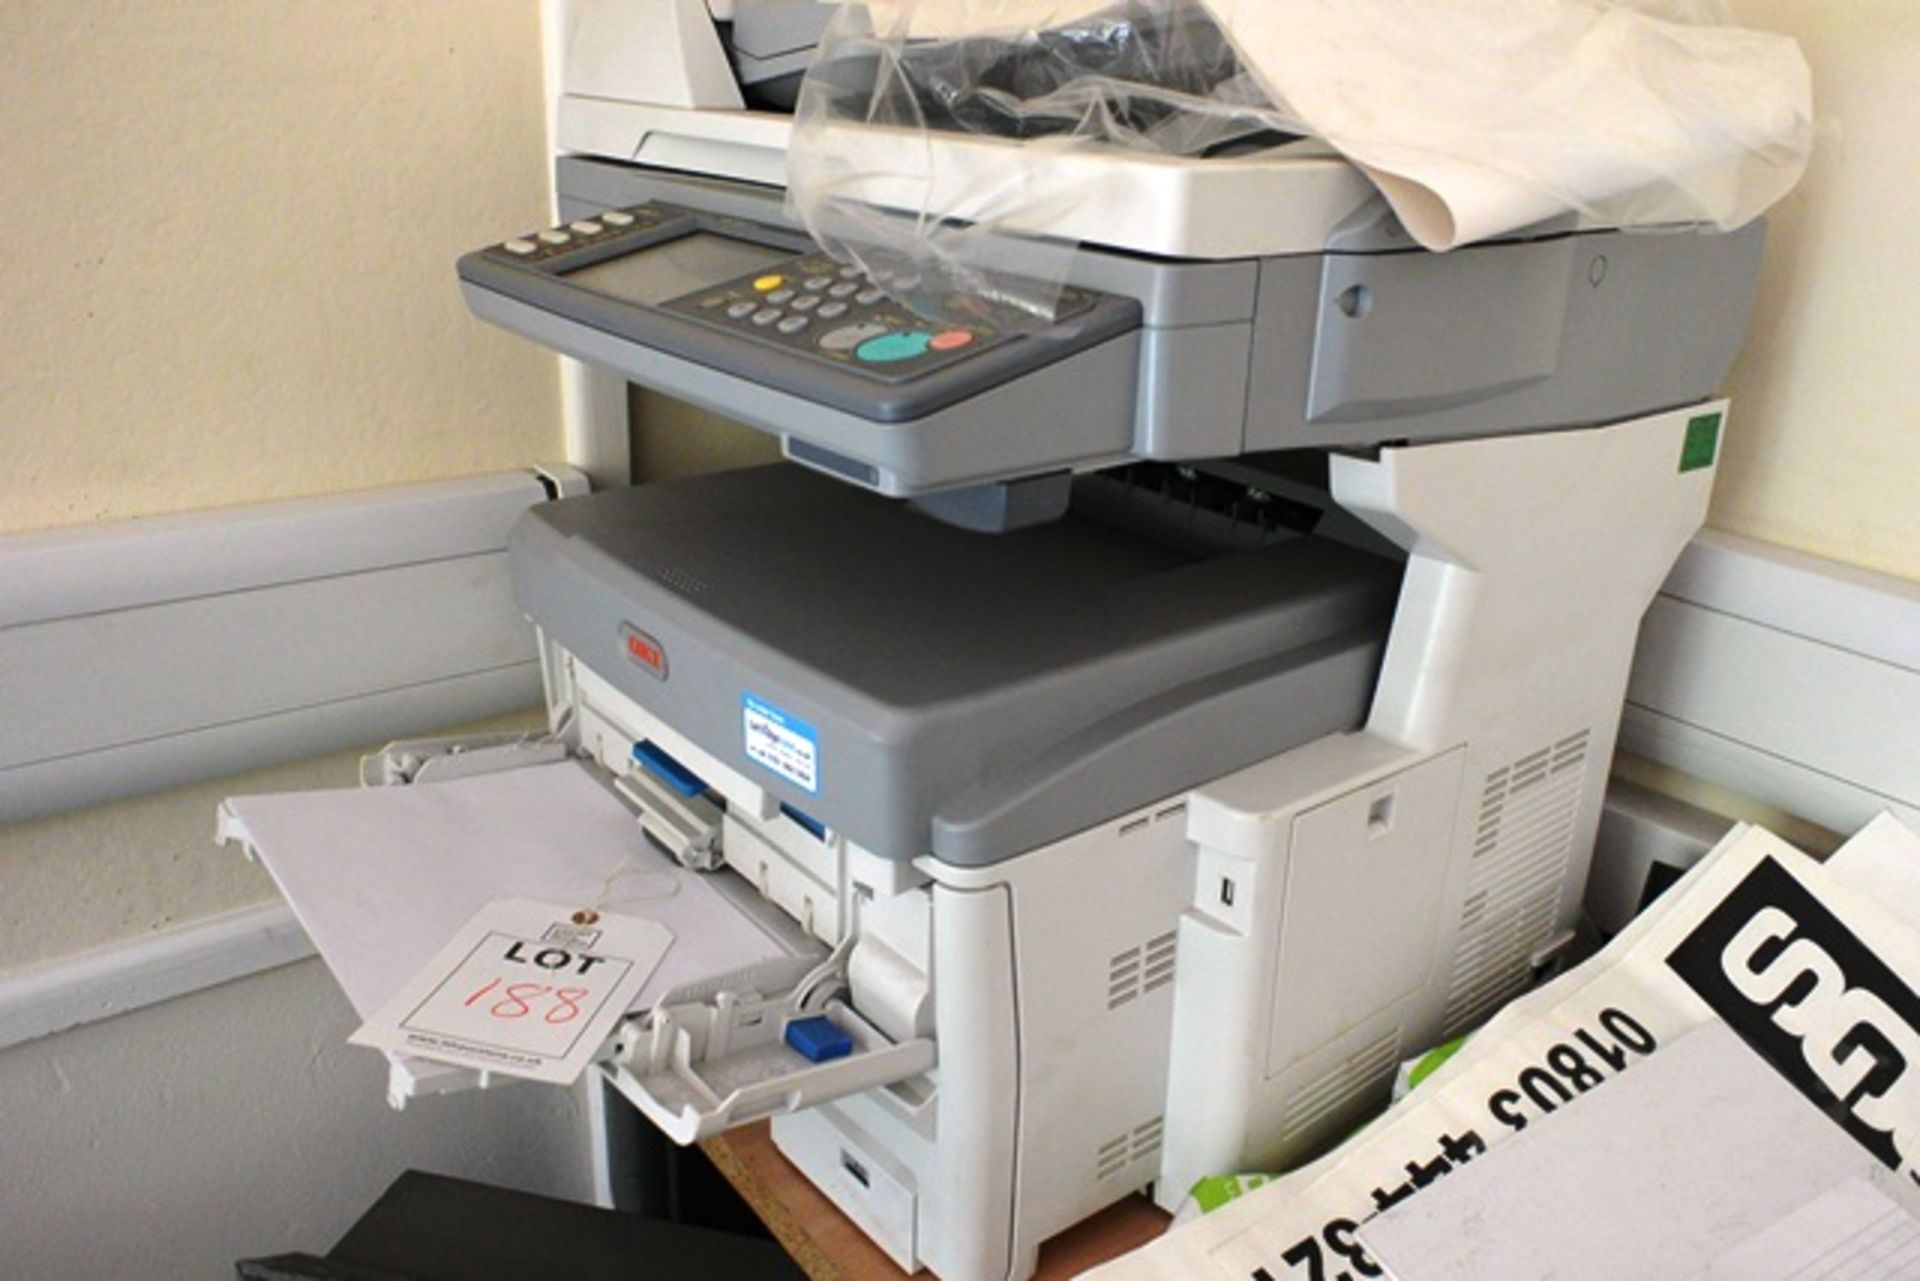 Oki MC851+ laser printer/copier